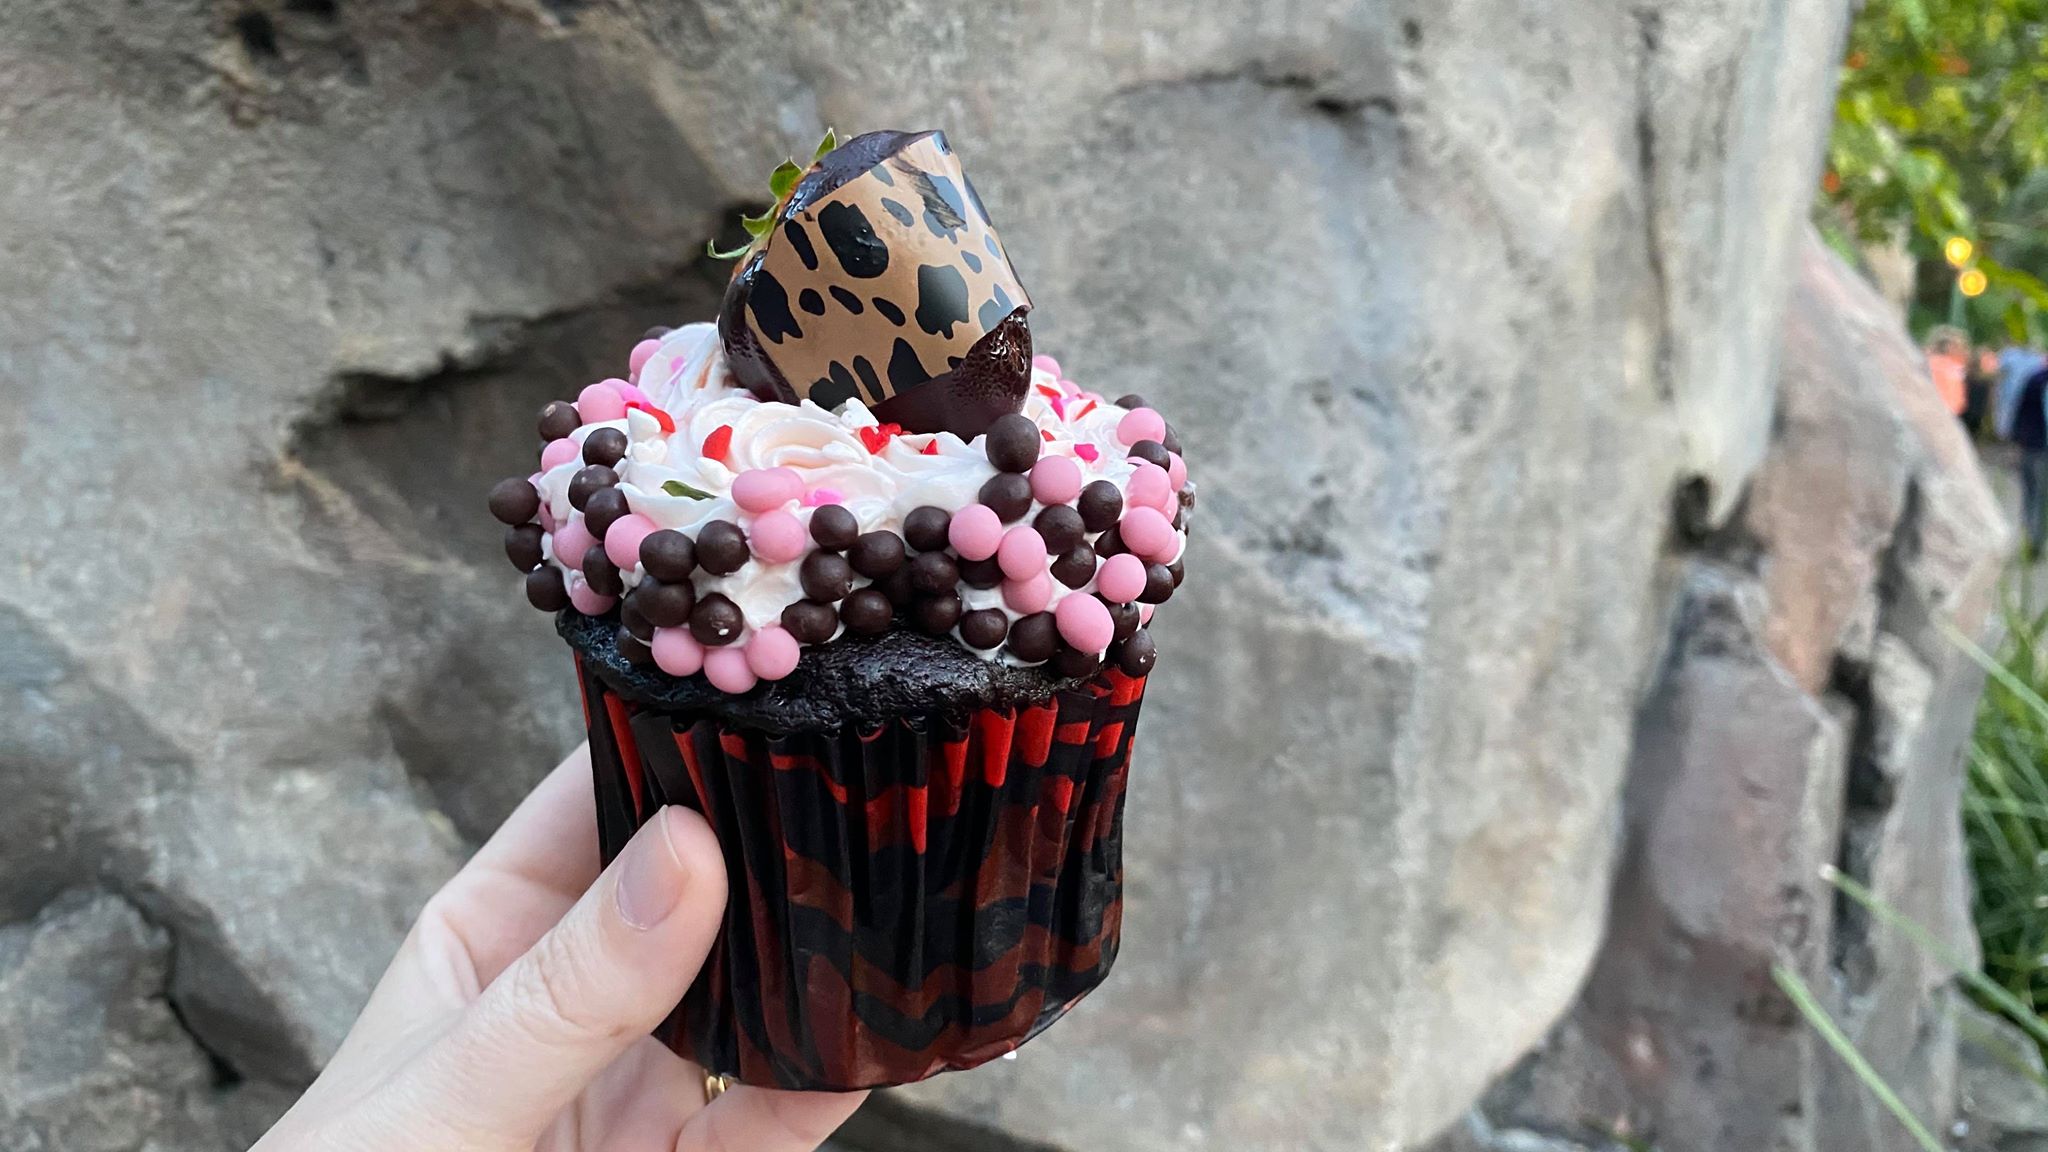 New Valentine’s Day Cupcake At Animal Kingdom!